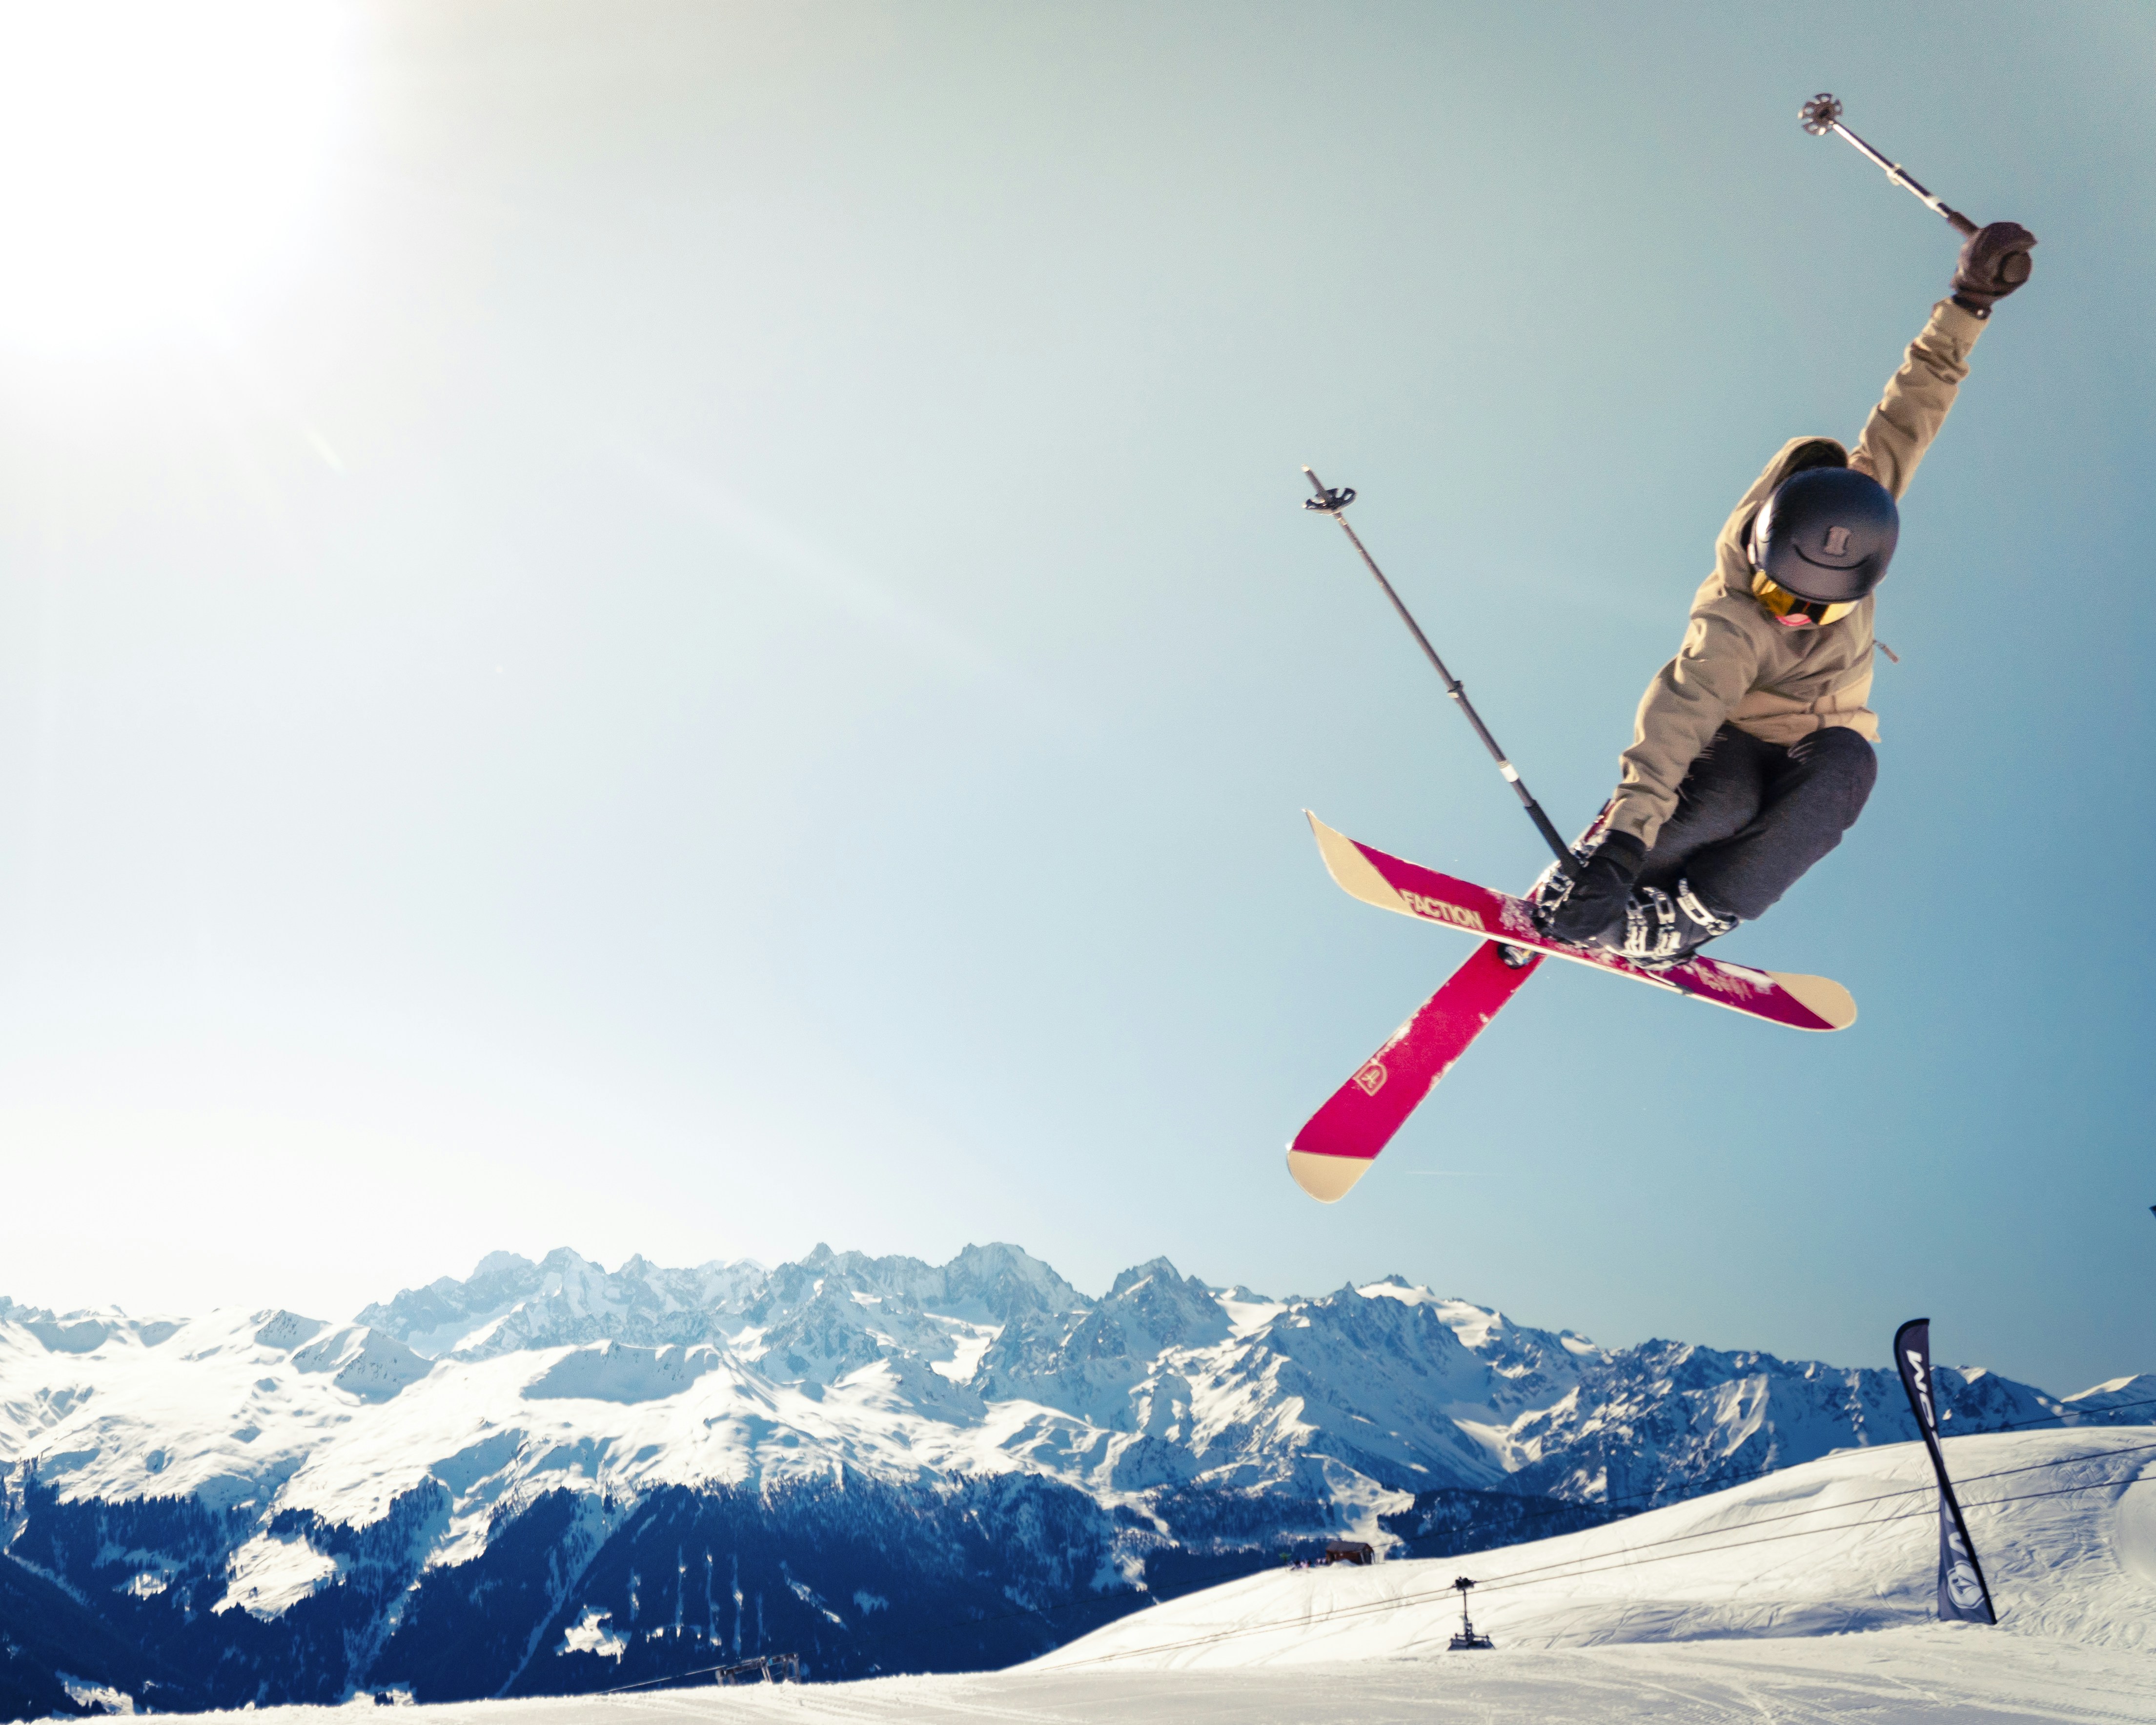 Skier Pictures Download Free Images on Unsplash